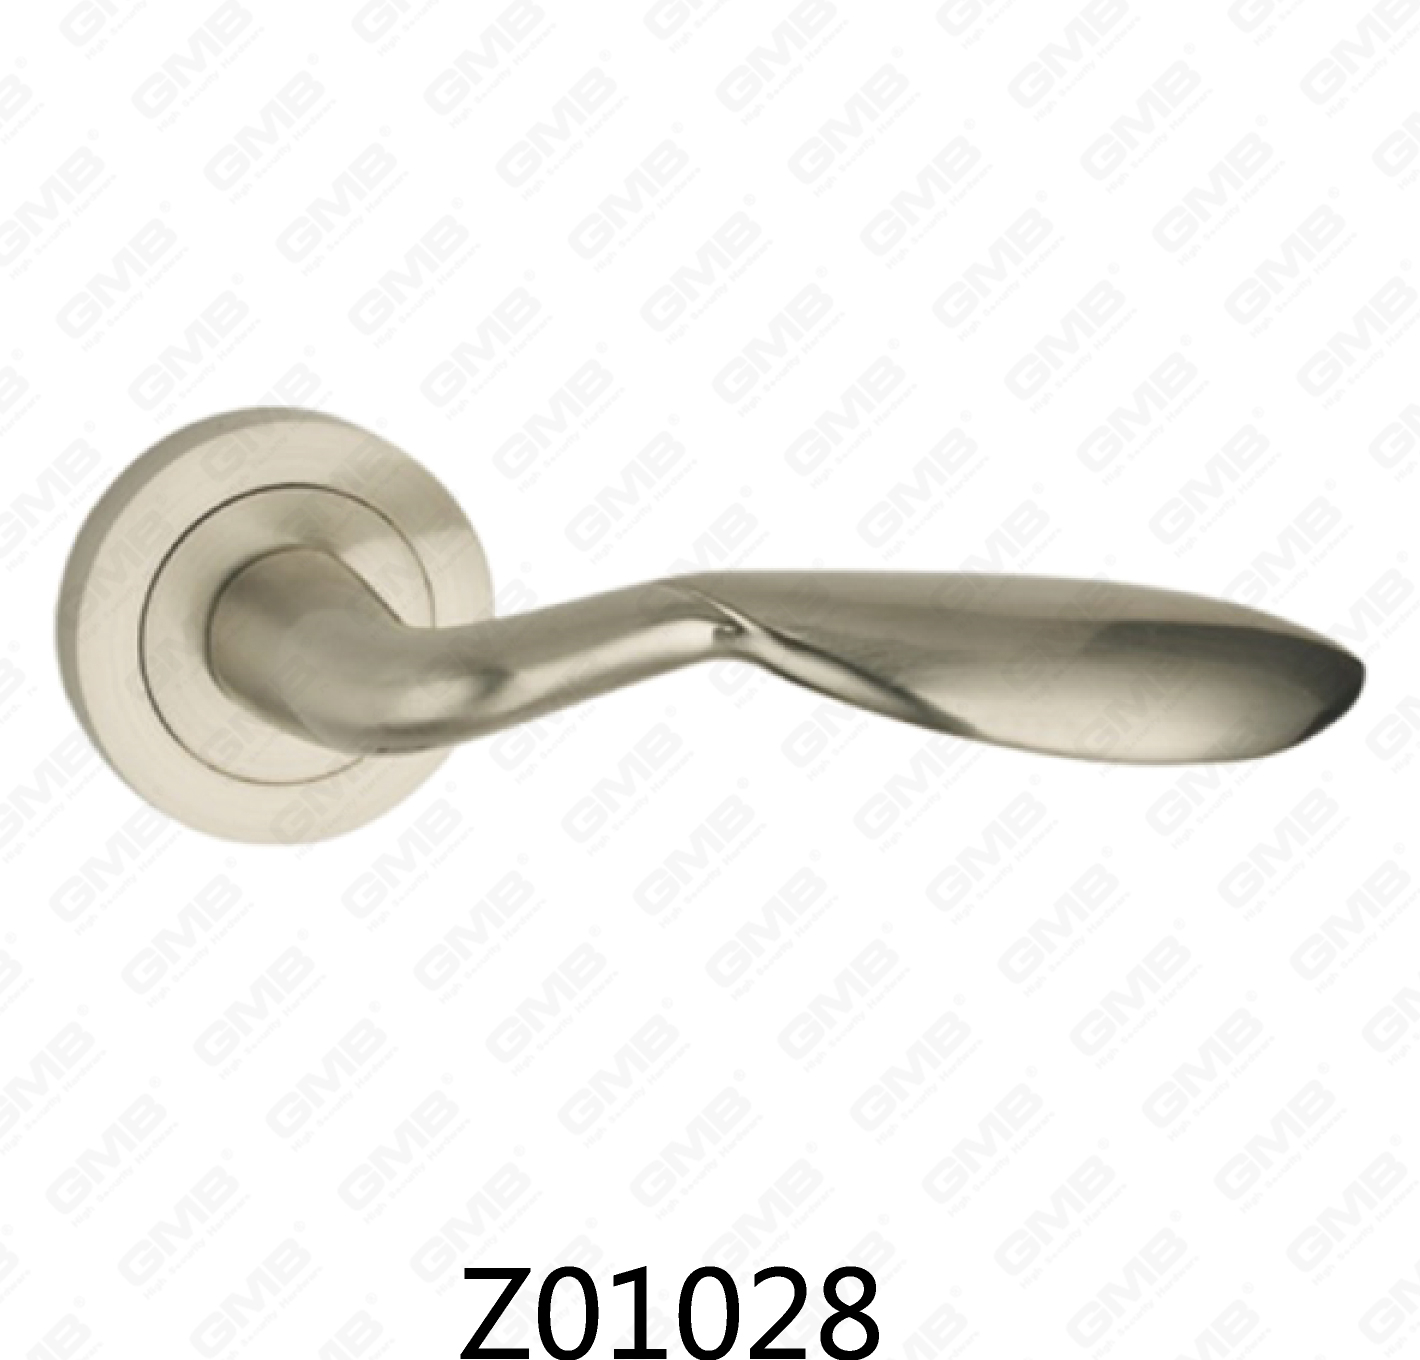 Rosetón de aluminio de aleación de zinc Zamak Manija de puerta con roseta redonda (Z01028)